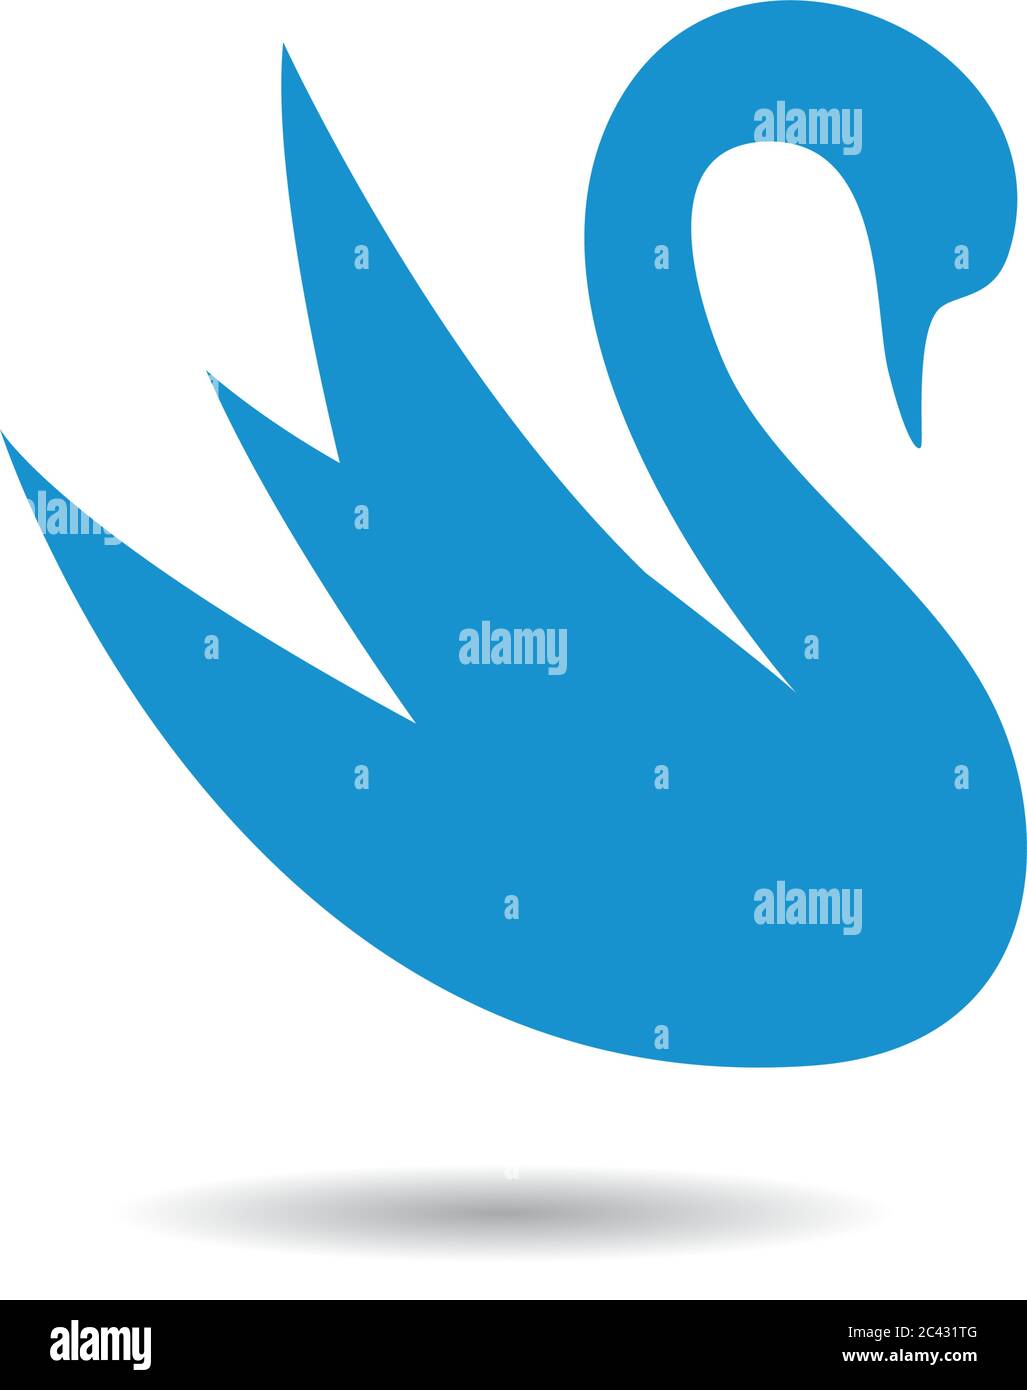 Swan logo Template vector icon illustration design Stock Vector Image ...